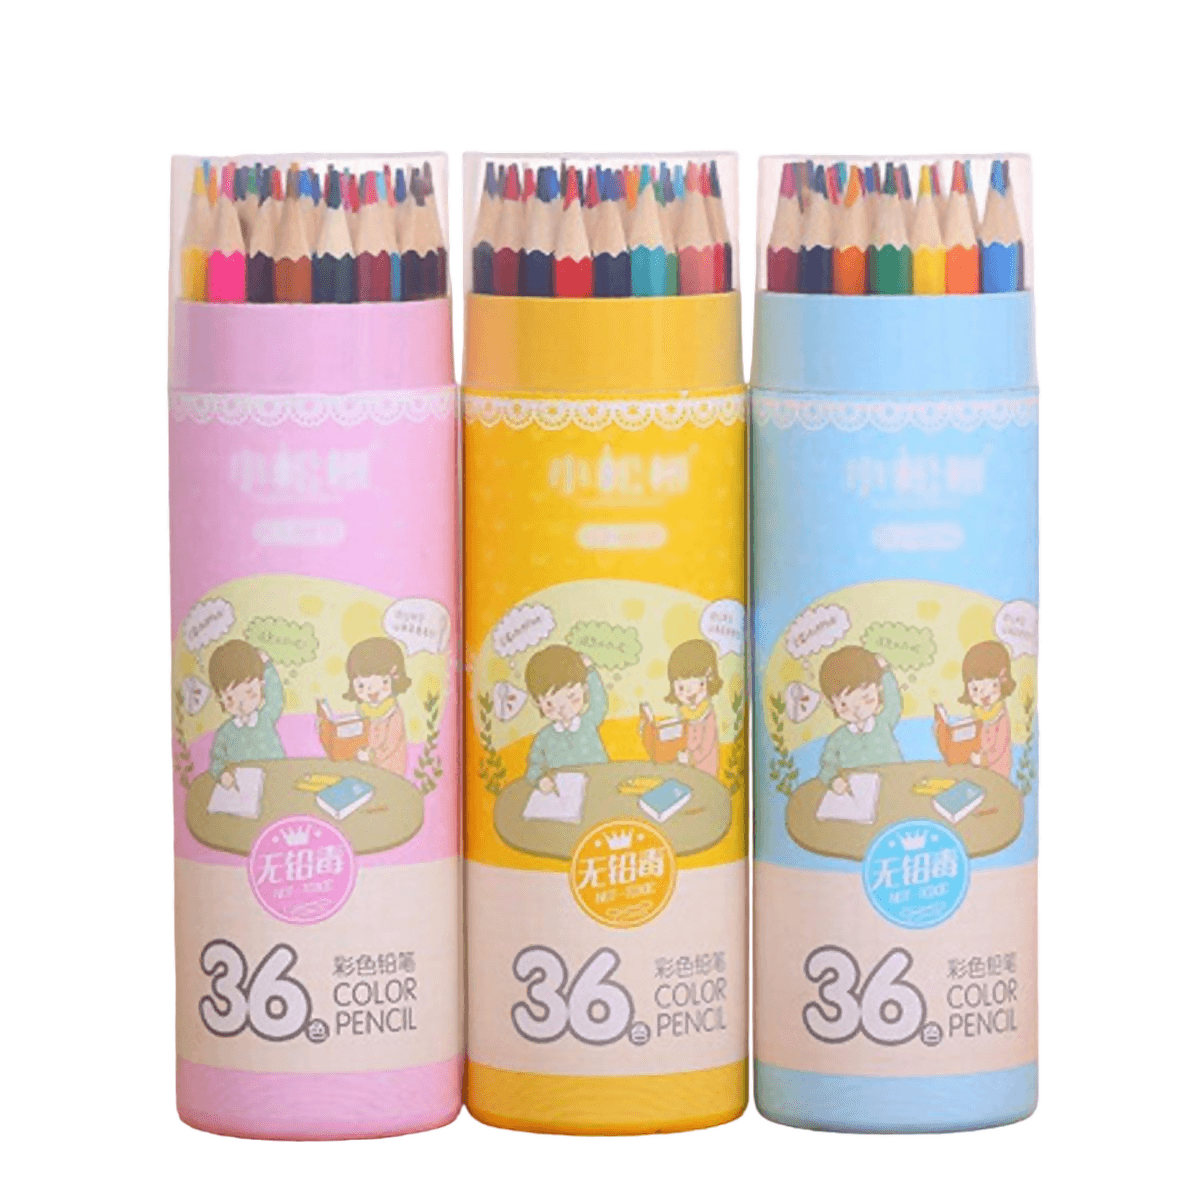 36 Color Multicolored Pencil Jar Non Toxic Large Size COLOR PENCIL 36 PCS SET WITH SHARPENER - ValueBox